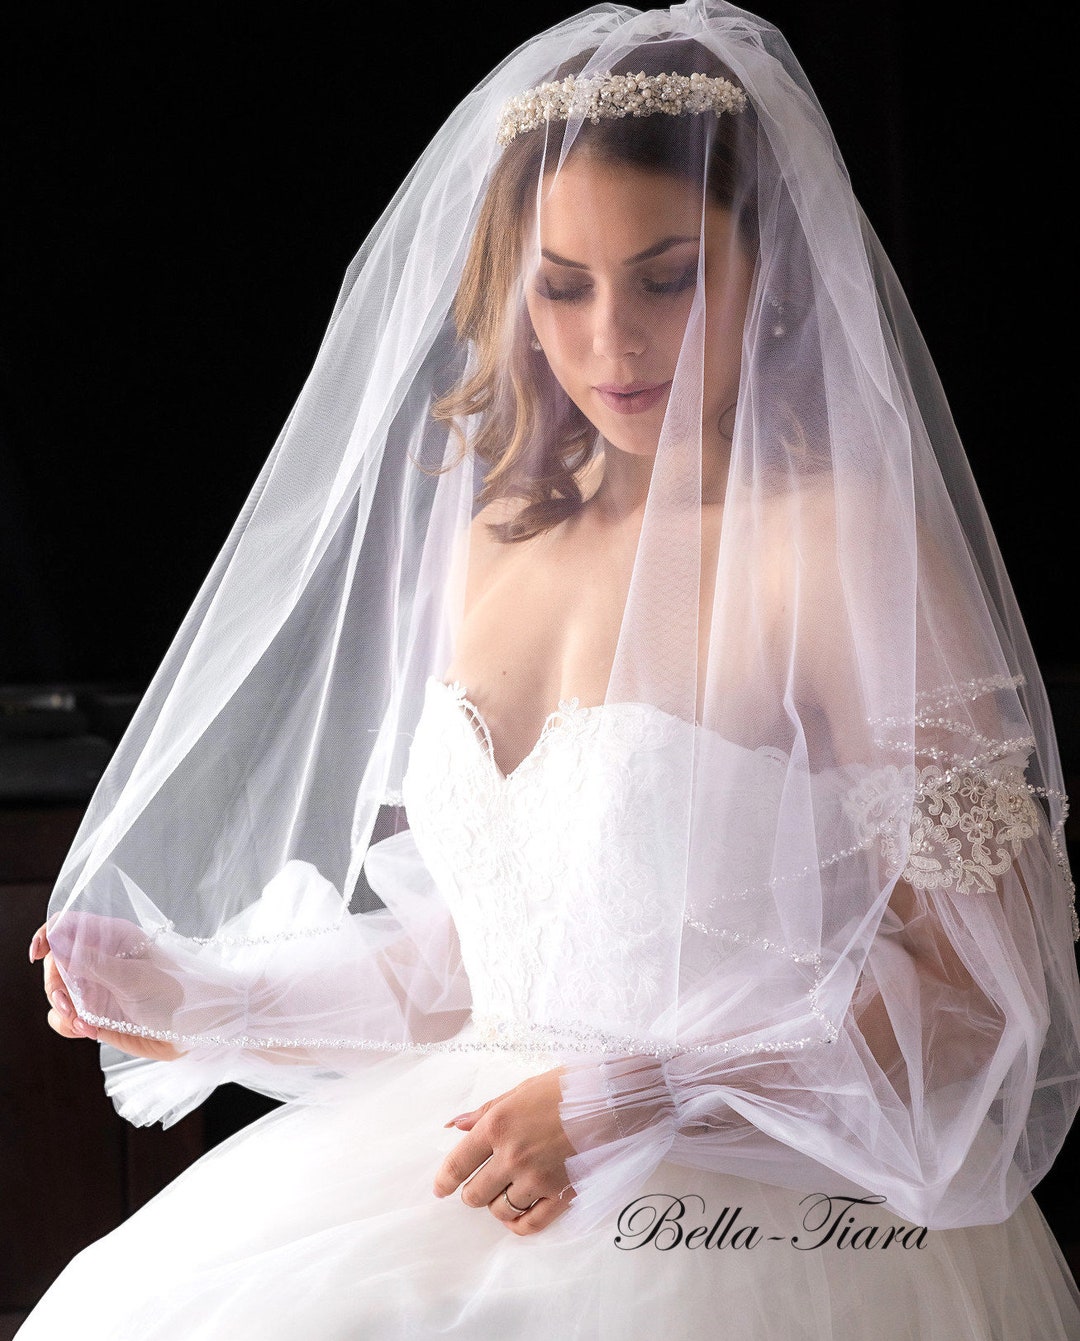 Brydealo Factory Beaded Two-Tiered Fingertip Length Designer Wedding Veil